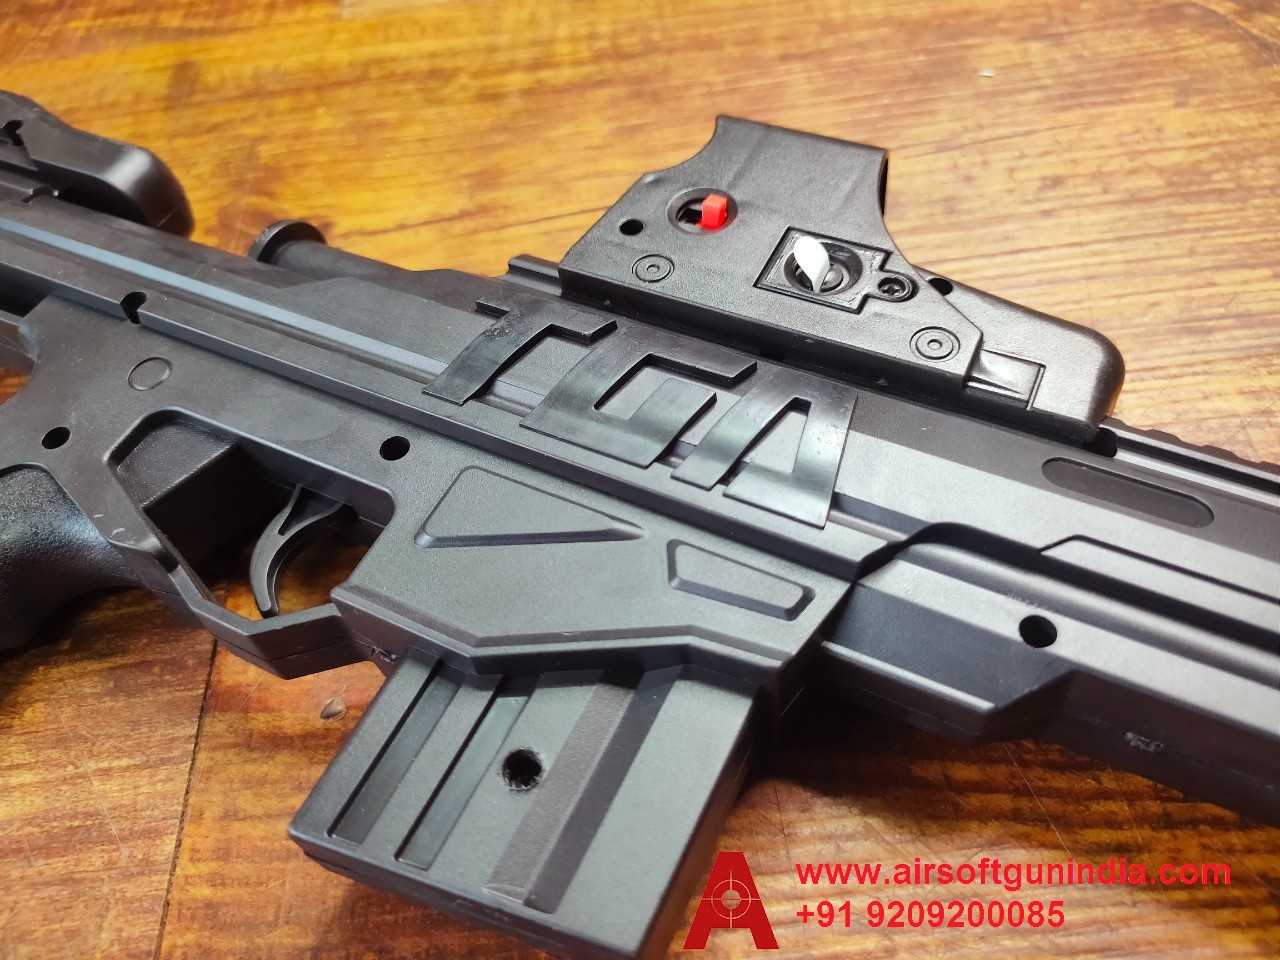 AR Pistol Y916 Toy By Airsoft Gun India